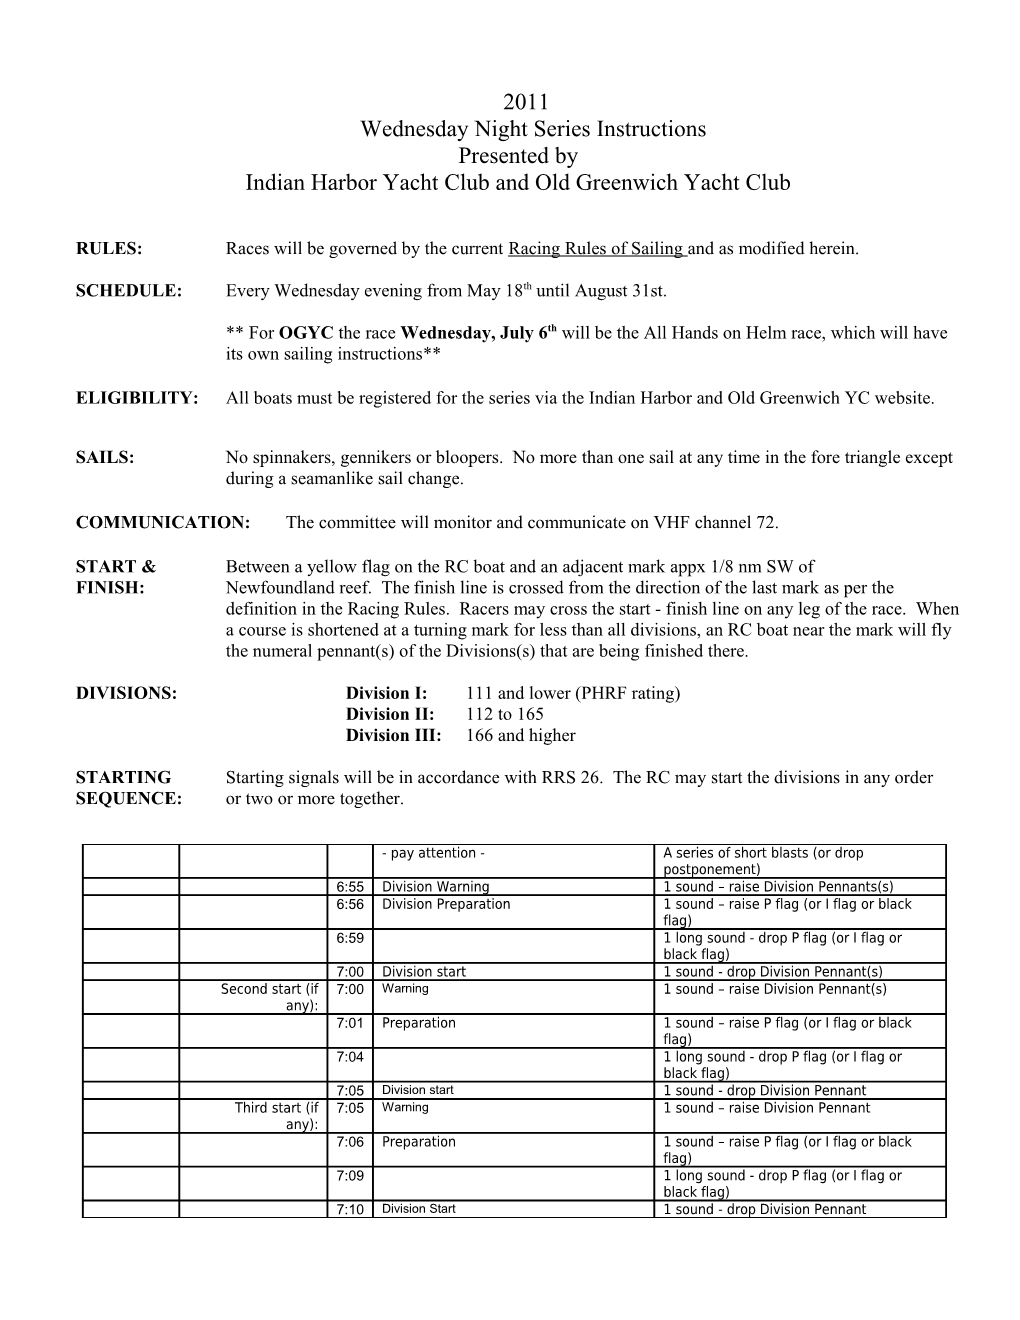 2005 Wednesday Night Series Race Instructions